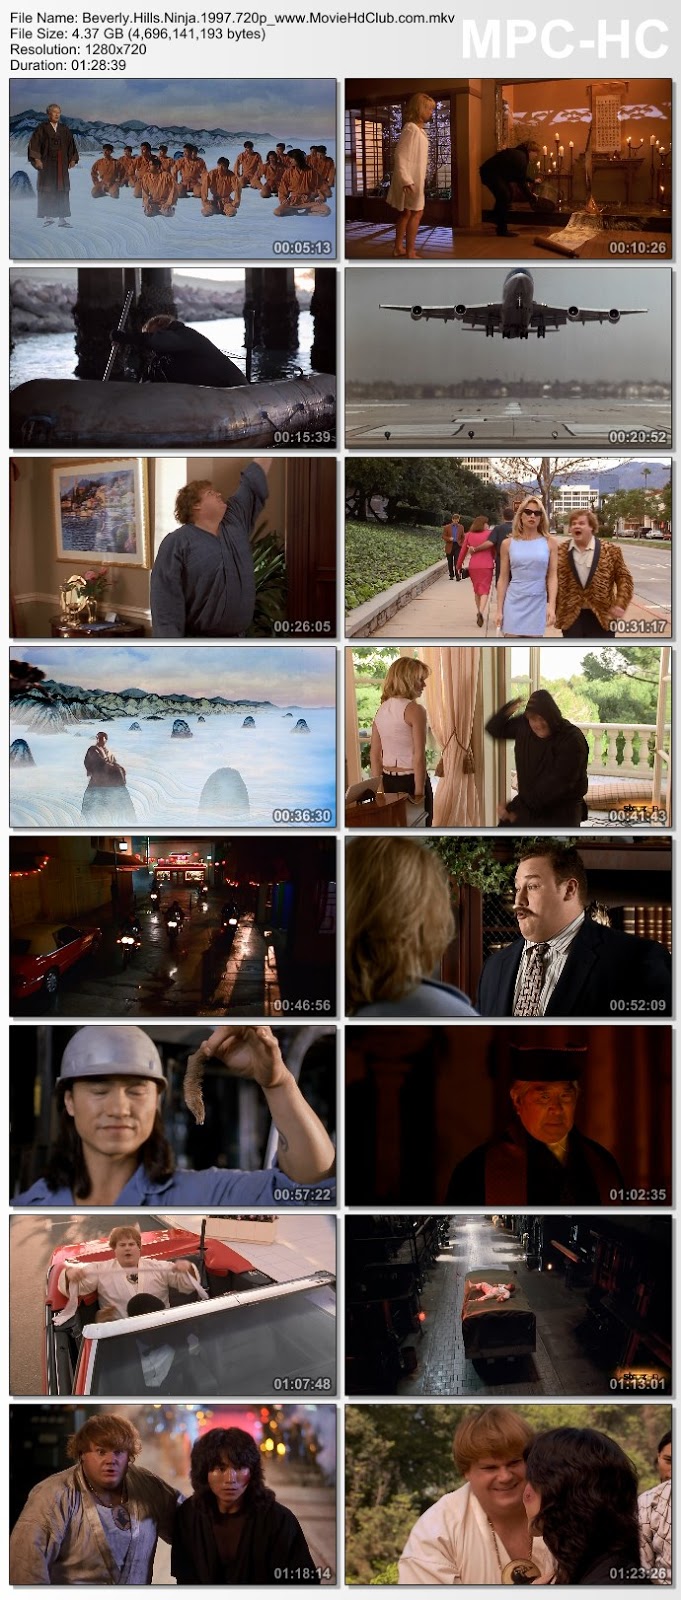 [Mini-HD] Beverly Hills Ninja (1997) - ตุ้ยนุ้ย นินจาฮากลิ้ง [HD-TV 720p][Soundtrack บรรยายไทย][.MKV][4.37GB] BN_MovieHdClub_SS